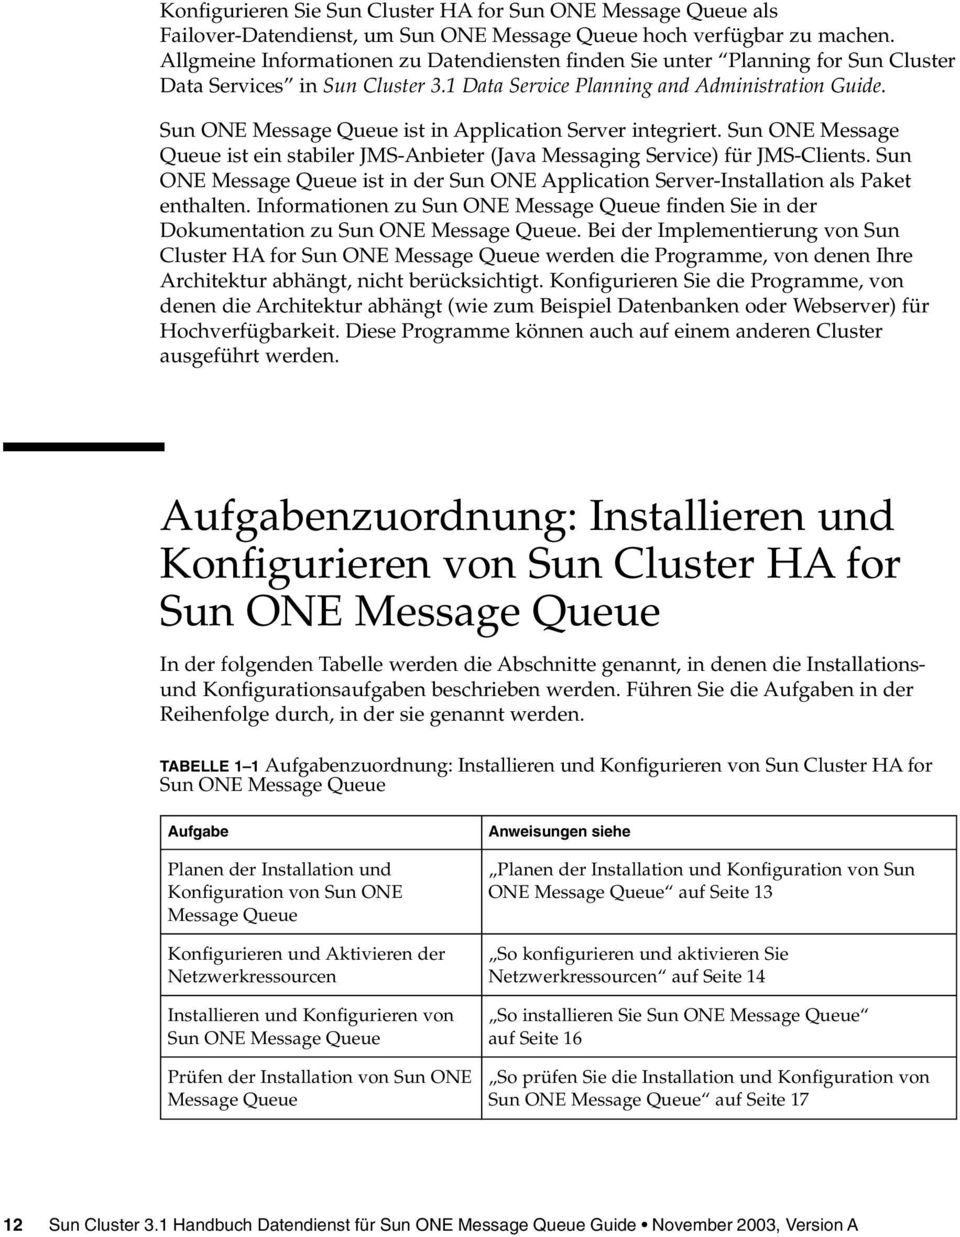 Sun ONE Message Queue ist in Application Server integriert. Sun ONE Message Queue ist ein stabiler JMS-Anbieter (Java Messaging Service) für JMS-Clients.